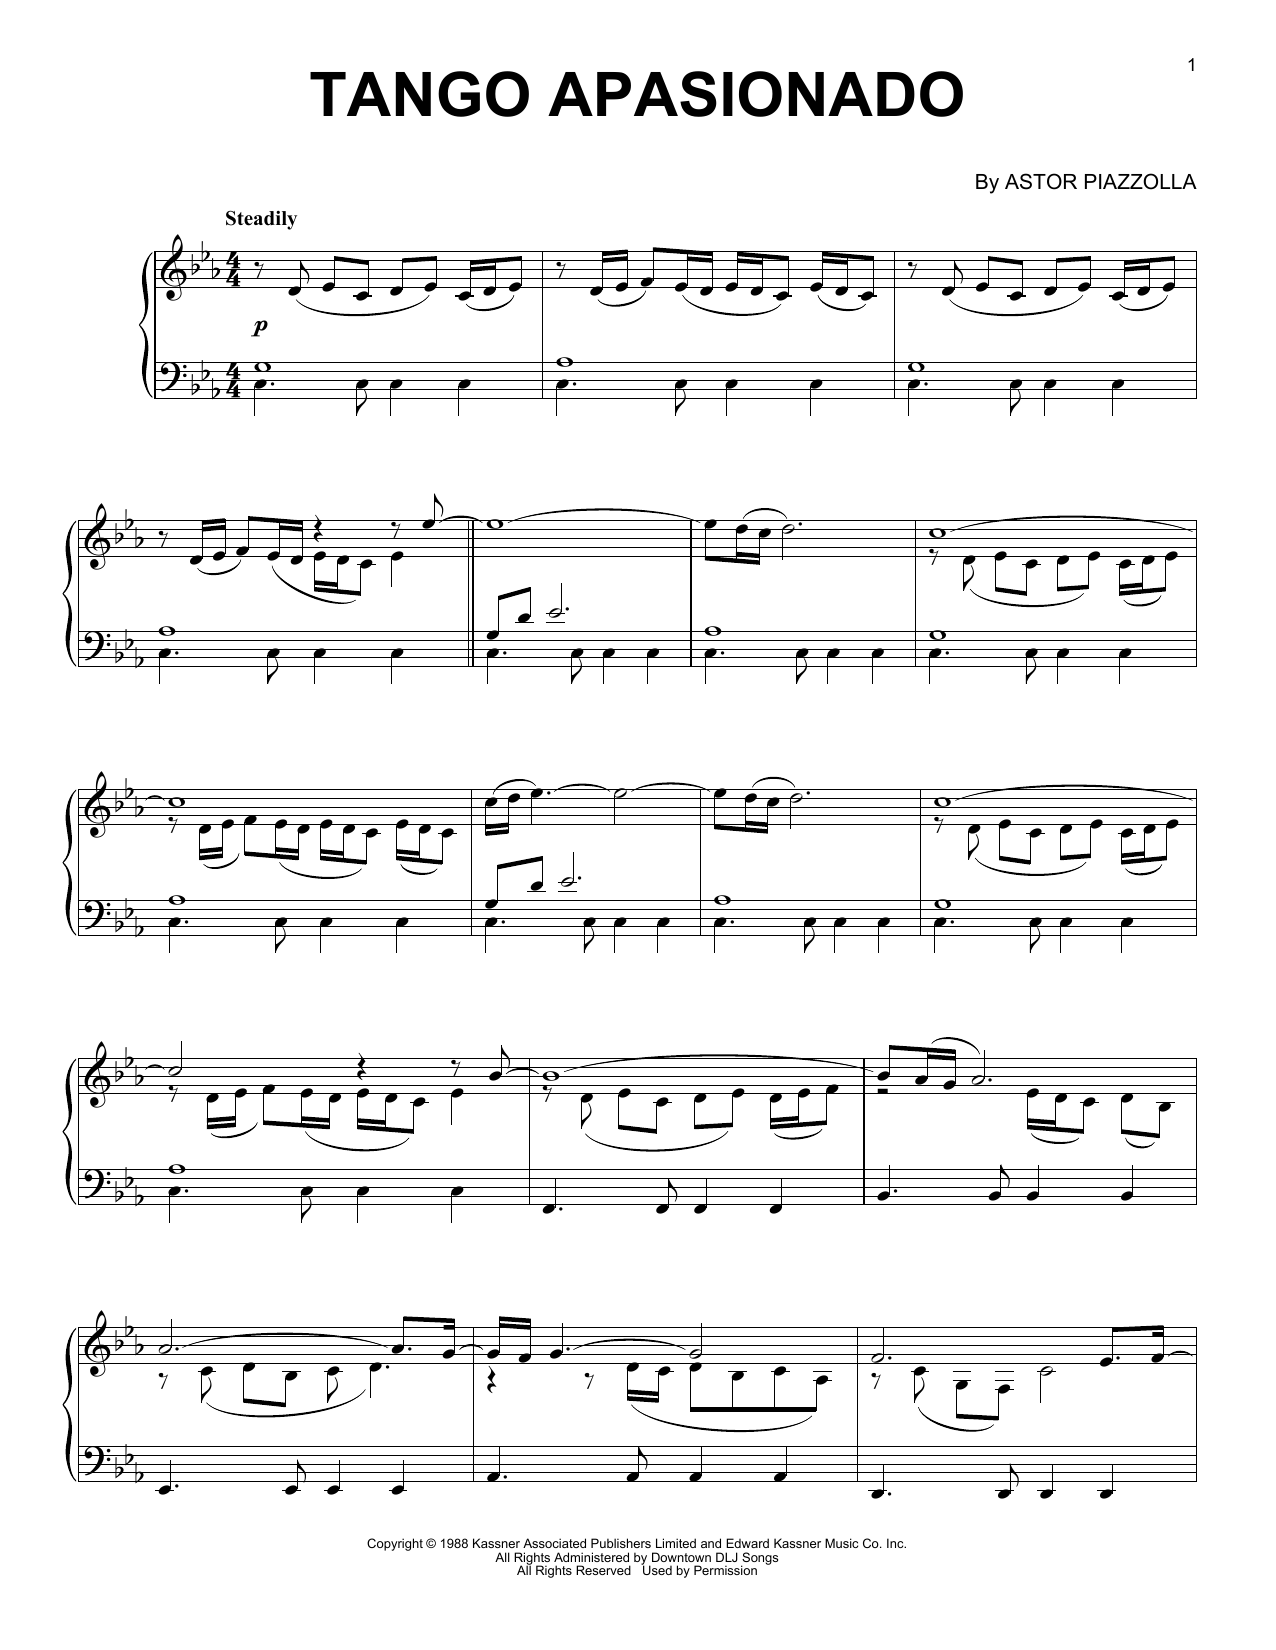 Astor Piazzolla Tango Apasionado Sheet Music Notes & Chords for Piano Solo - Download or Print PDF